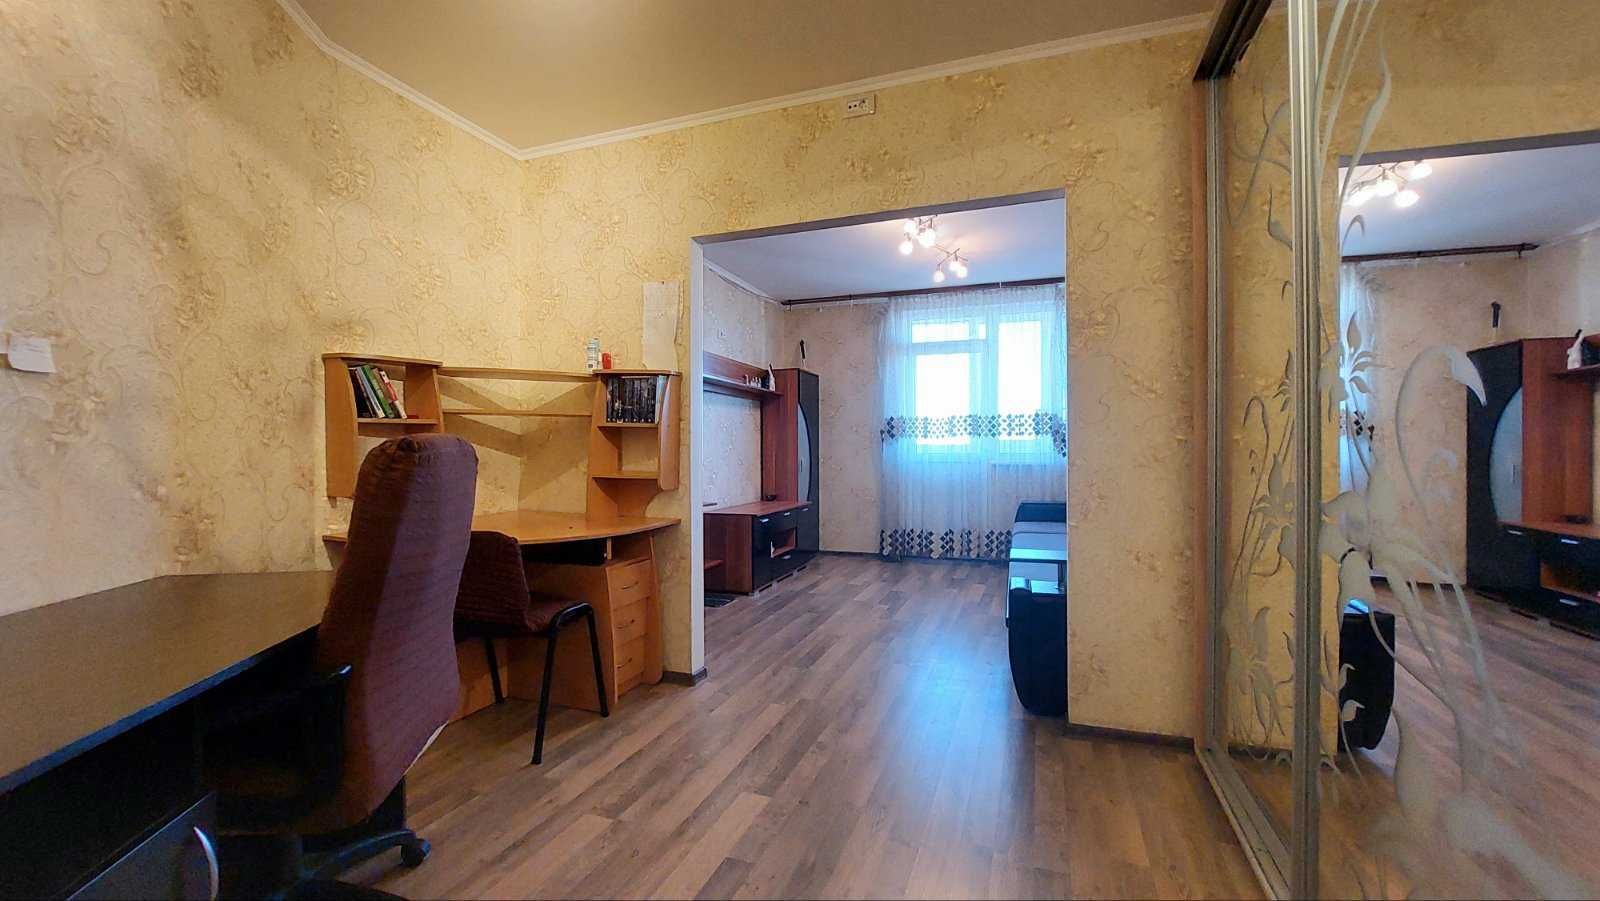 Продам квартиру в ЖК Левитана, Таирова